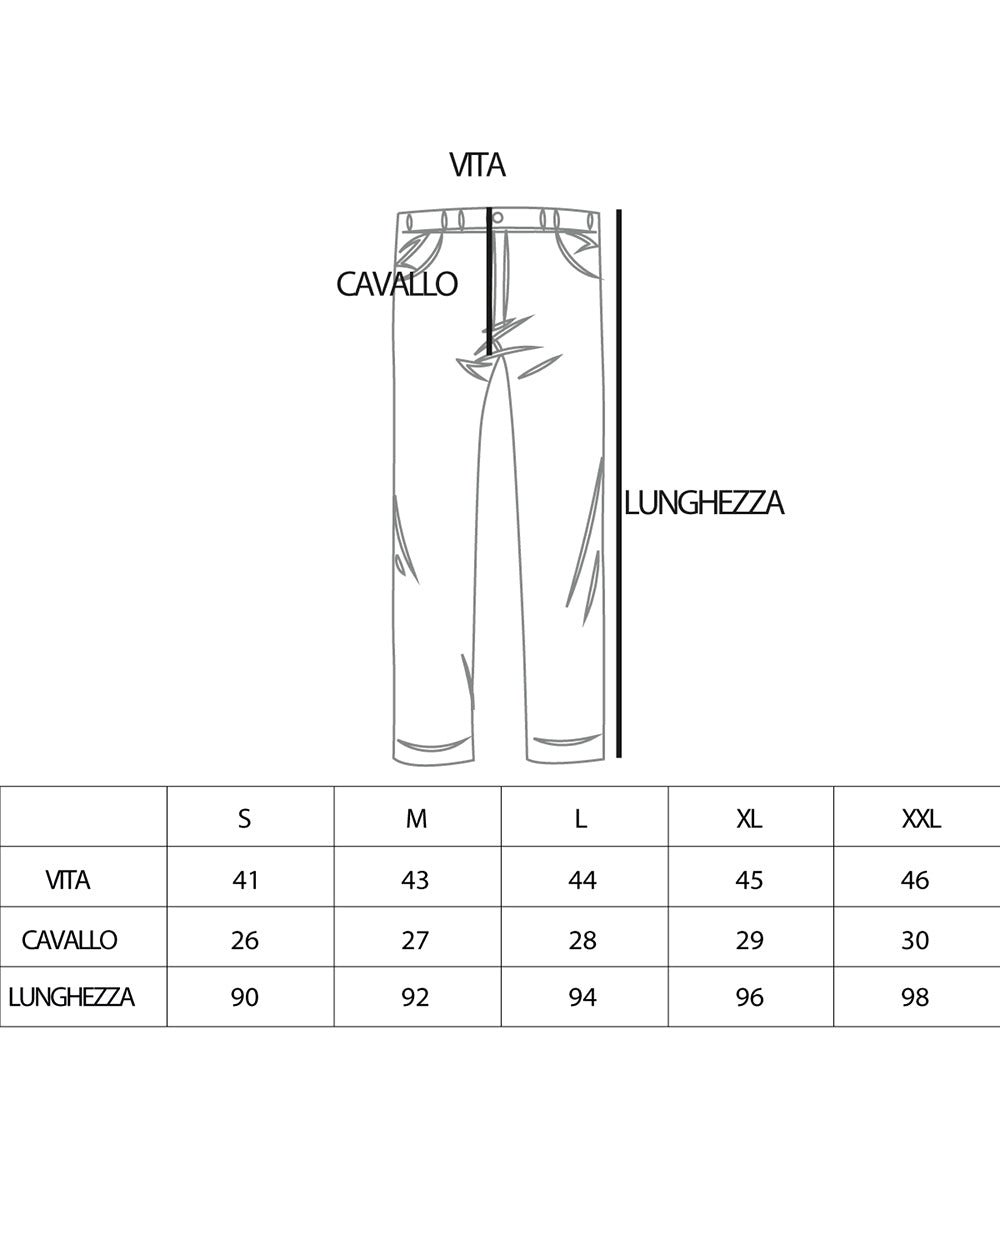 Pantaloni Uomo Tasca America Lino Tinta Unita Beige Casual Laccio GIOSAL-P3745A